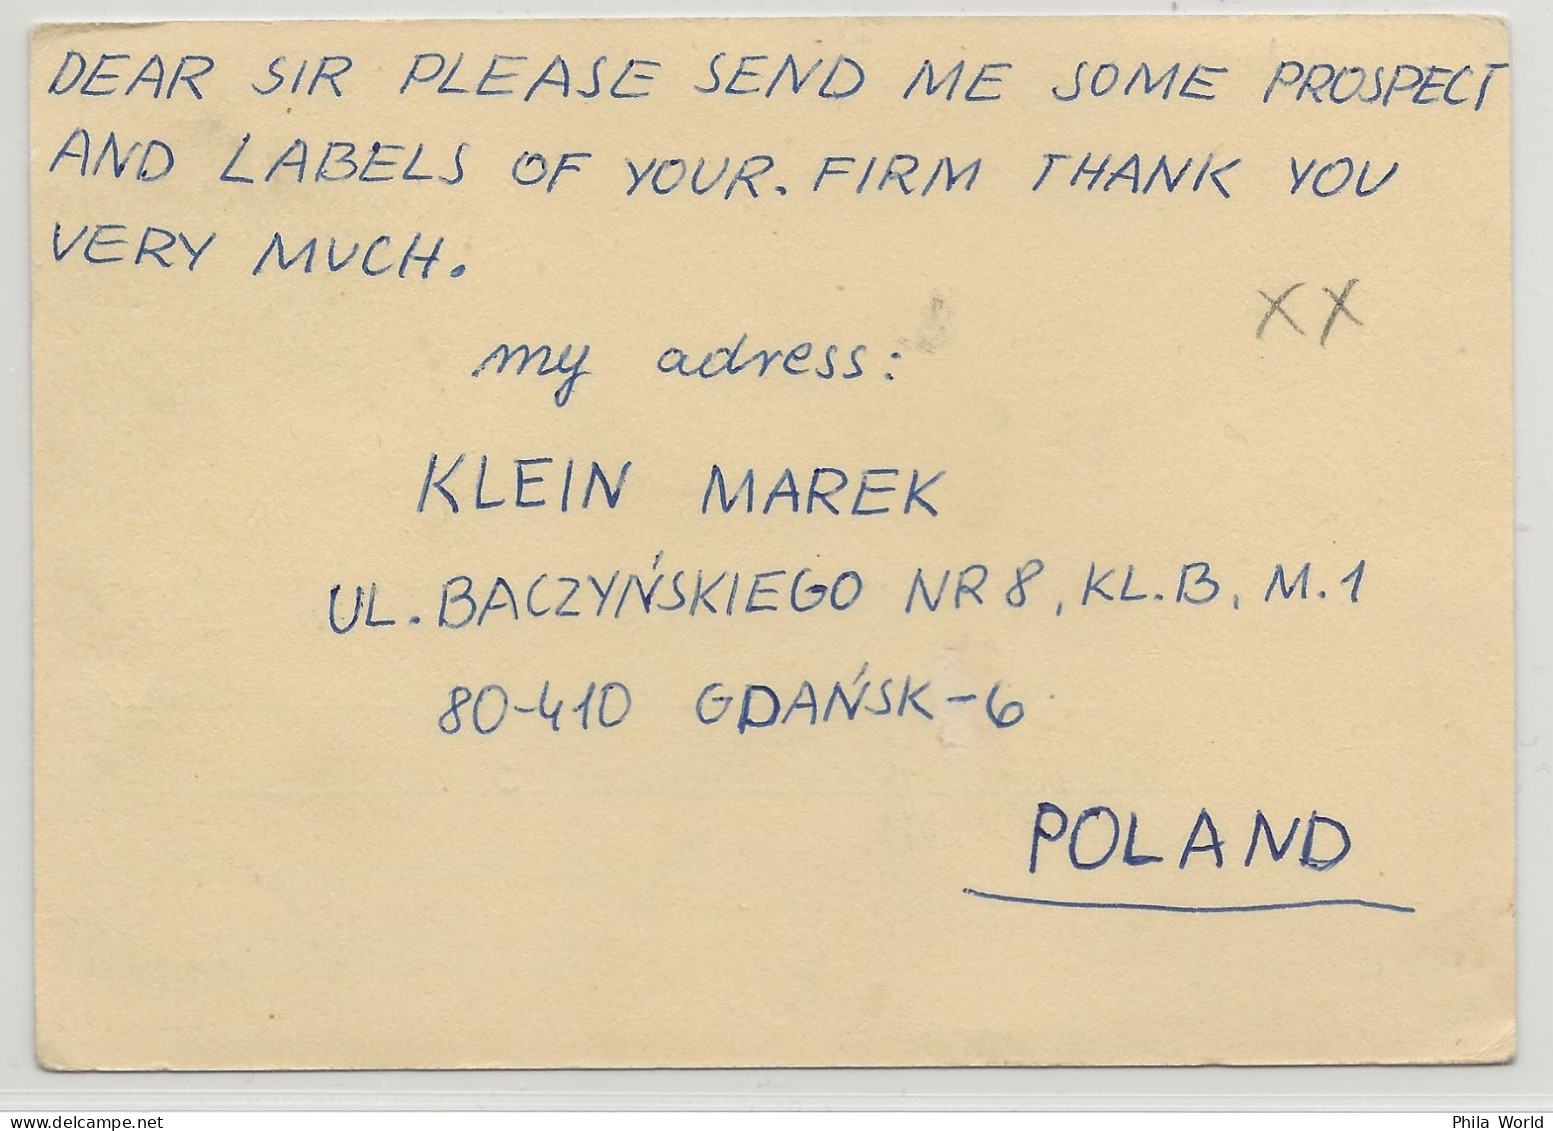 POLOGNE POLAND POLSKA 1980 Postal Stationery GDANSK 450 Rocznica Urodzin Kochanoskie Entier Postal - Ganzsachen